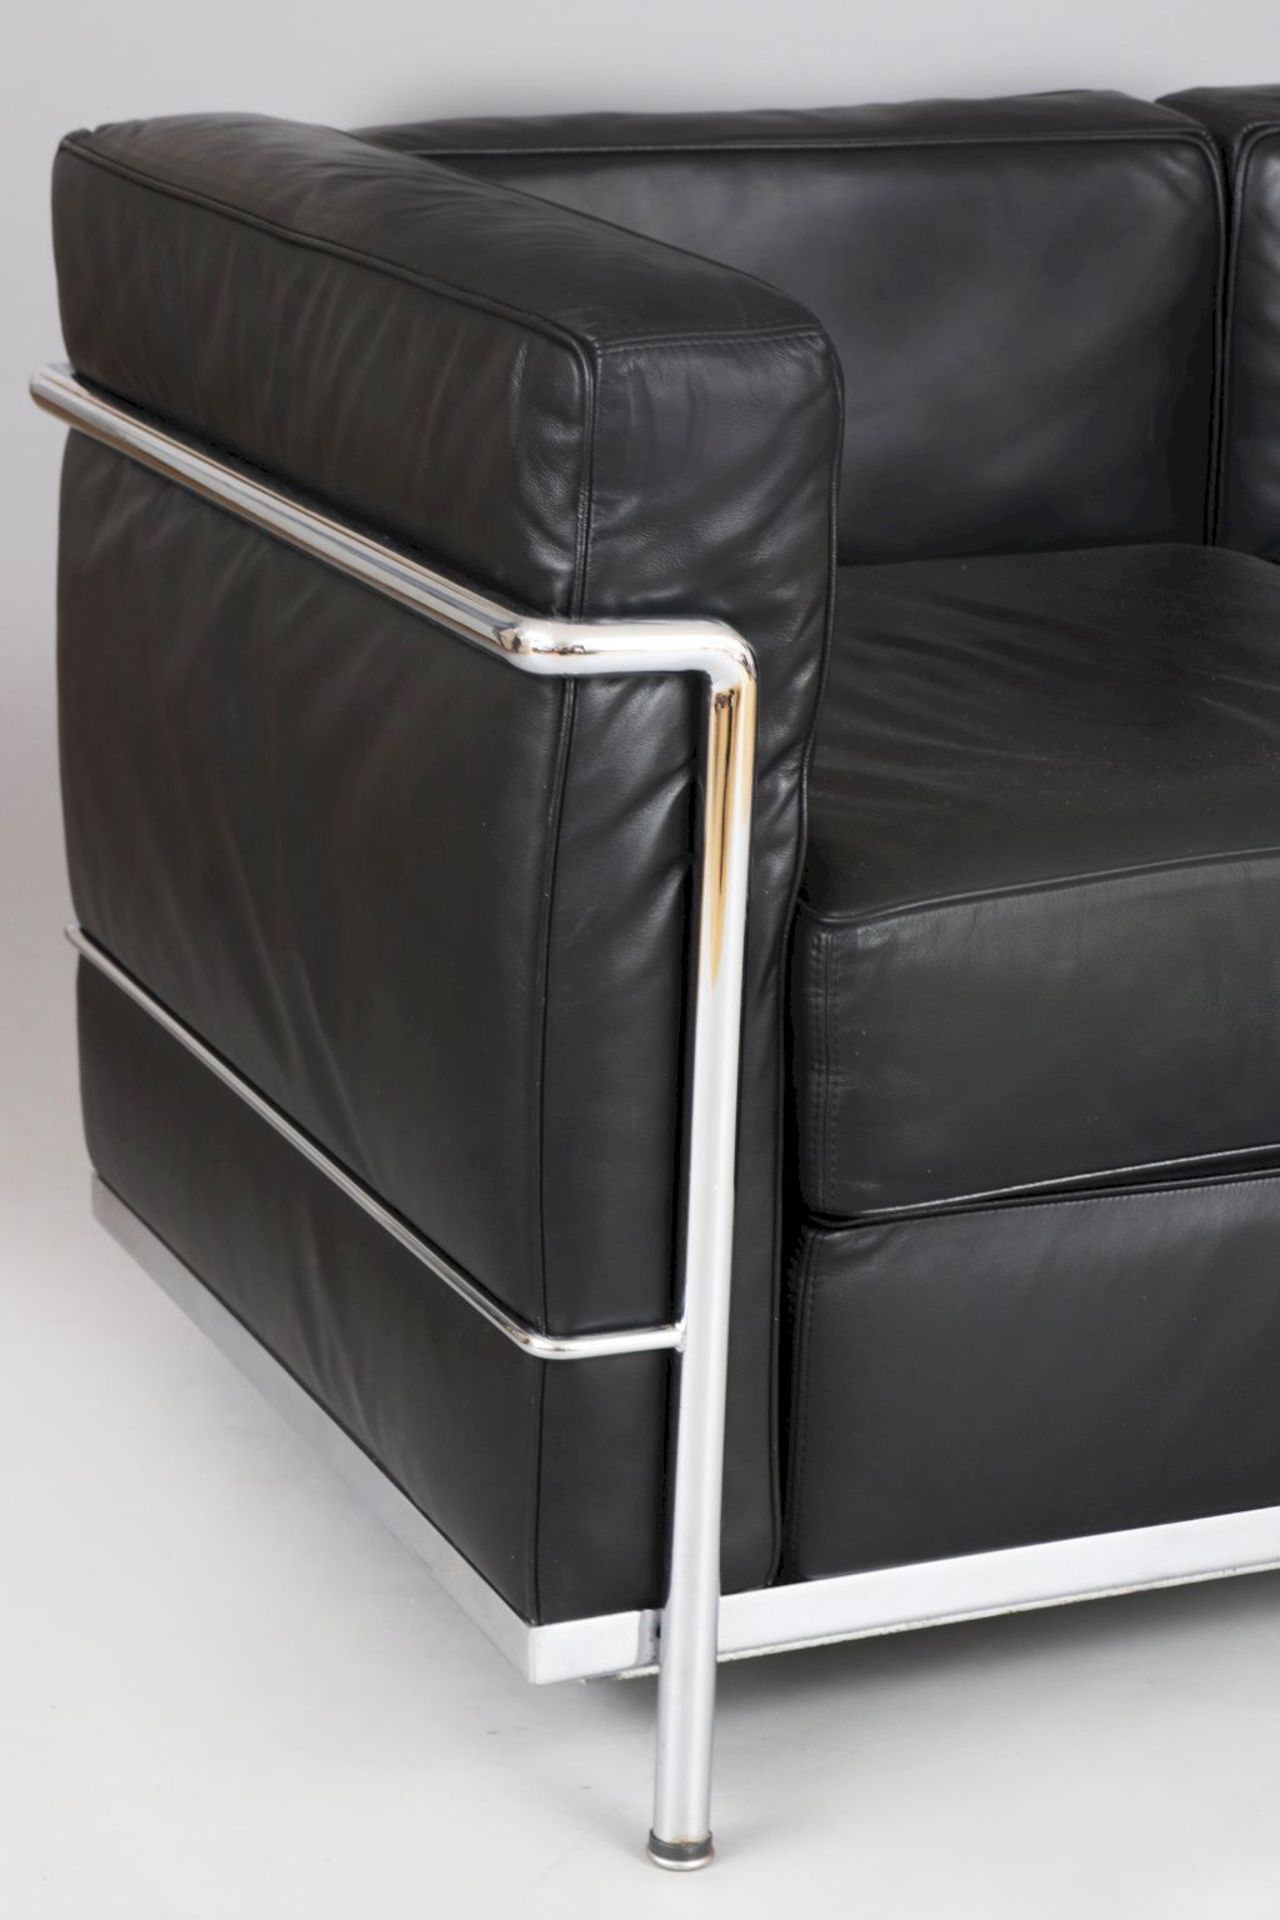 Sofa im Bauhaus-Stil2-sitzer, eckiger Rahmen aus verchromtem Stahlrohr, schwarz belederte Sitz- - Image 3 of 5